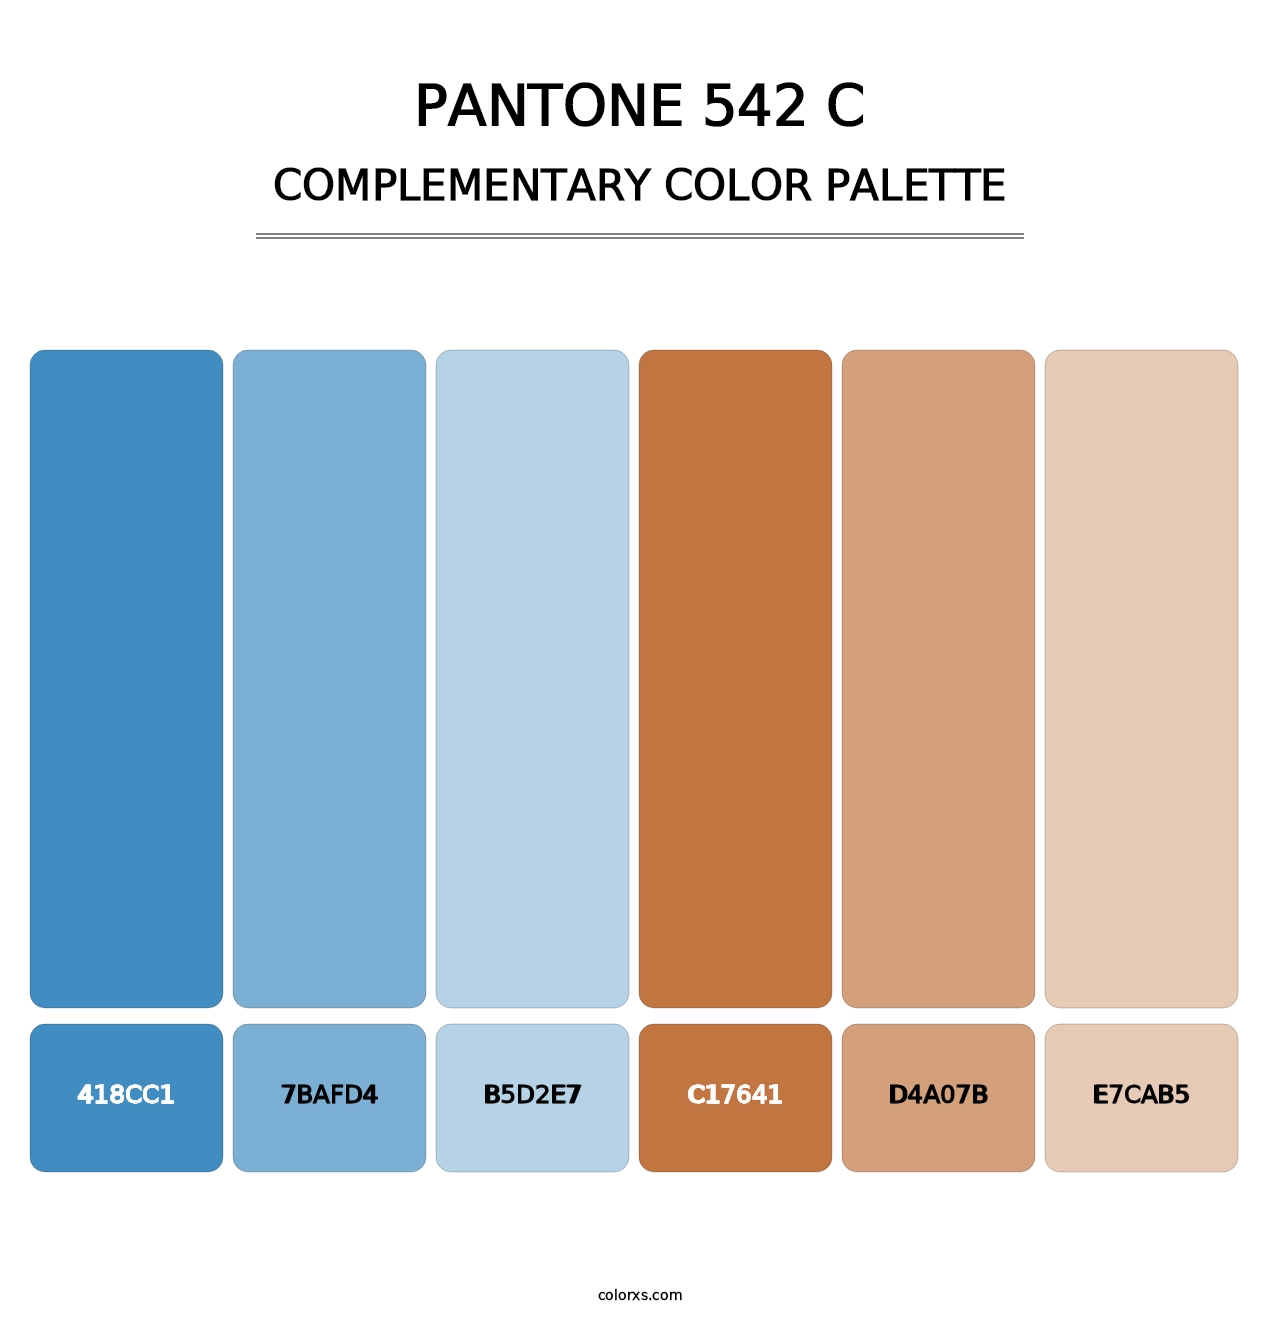 PANTONE 542 C - Complementary Color Palette